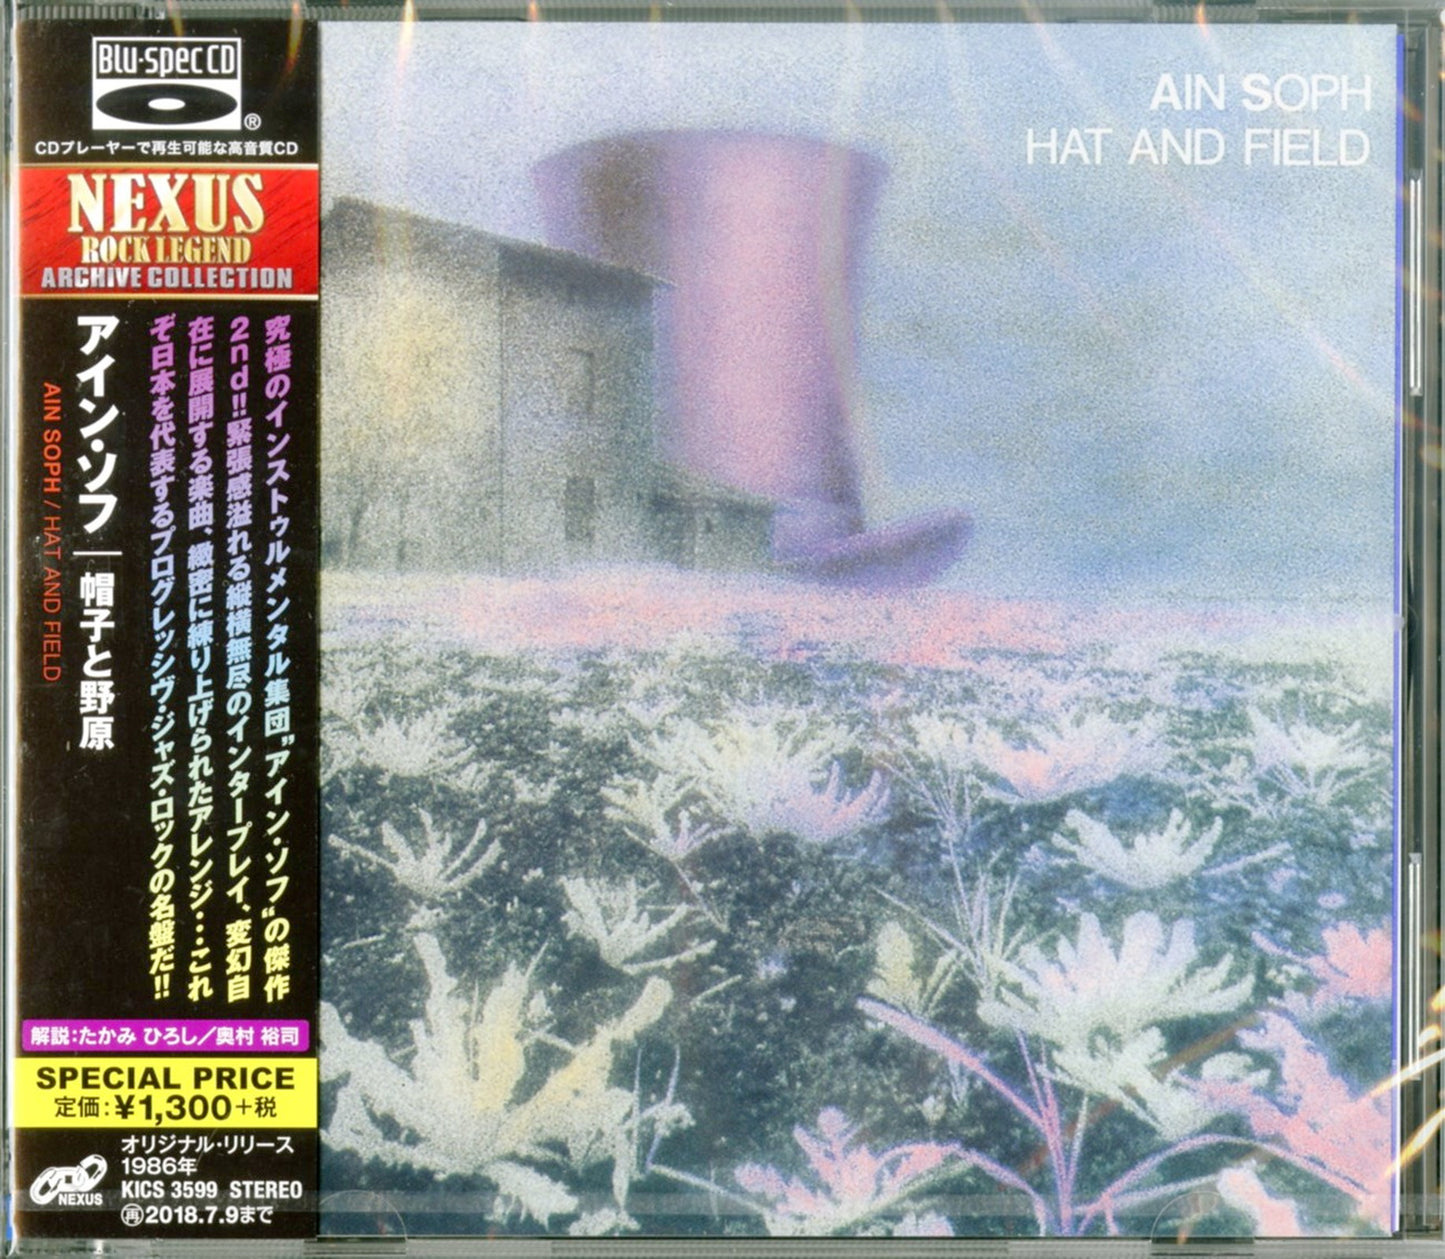 Ain Soph - Hat And Field - Japan  Blu-spec CD